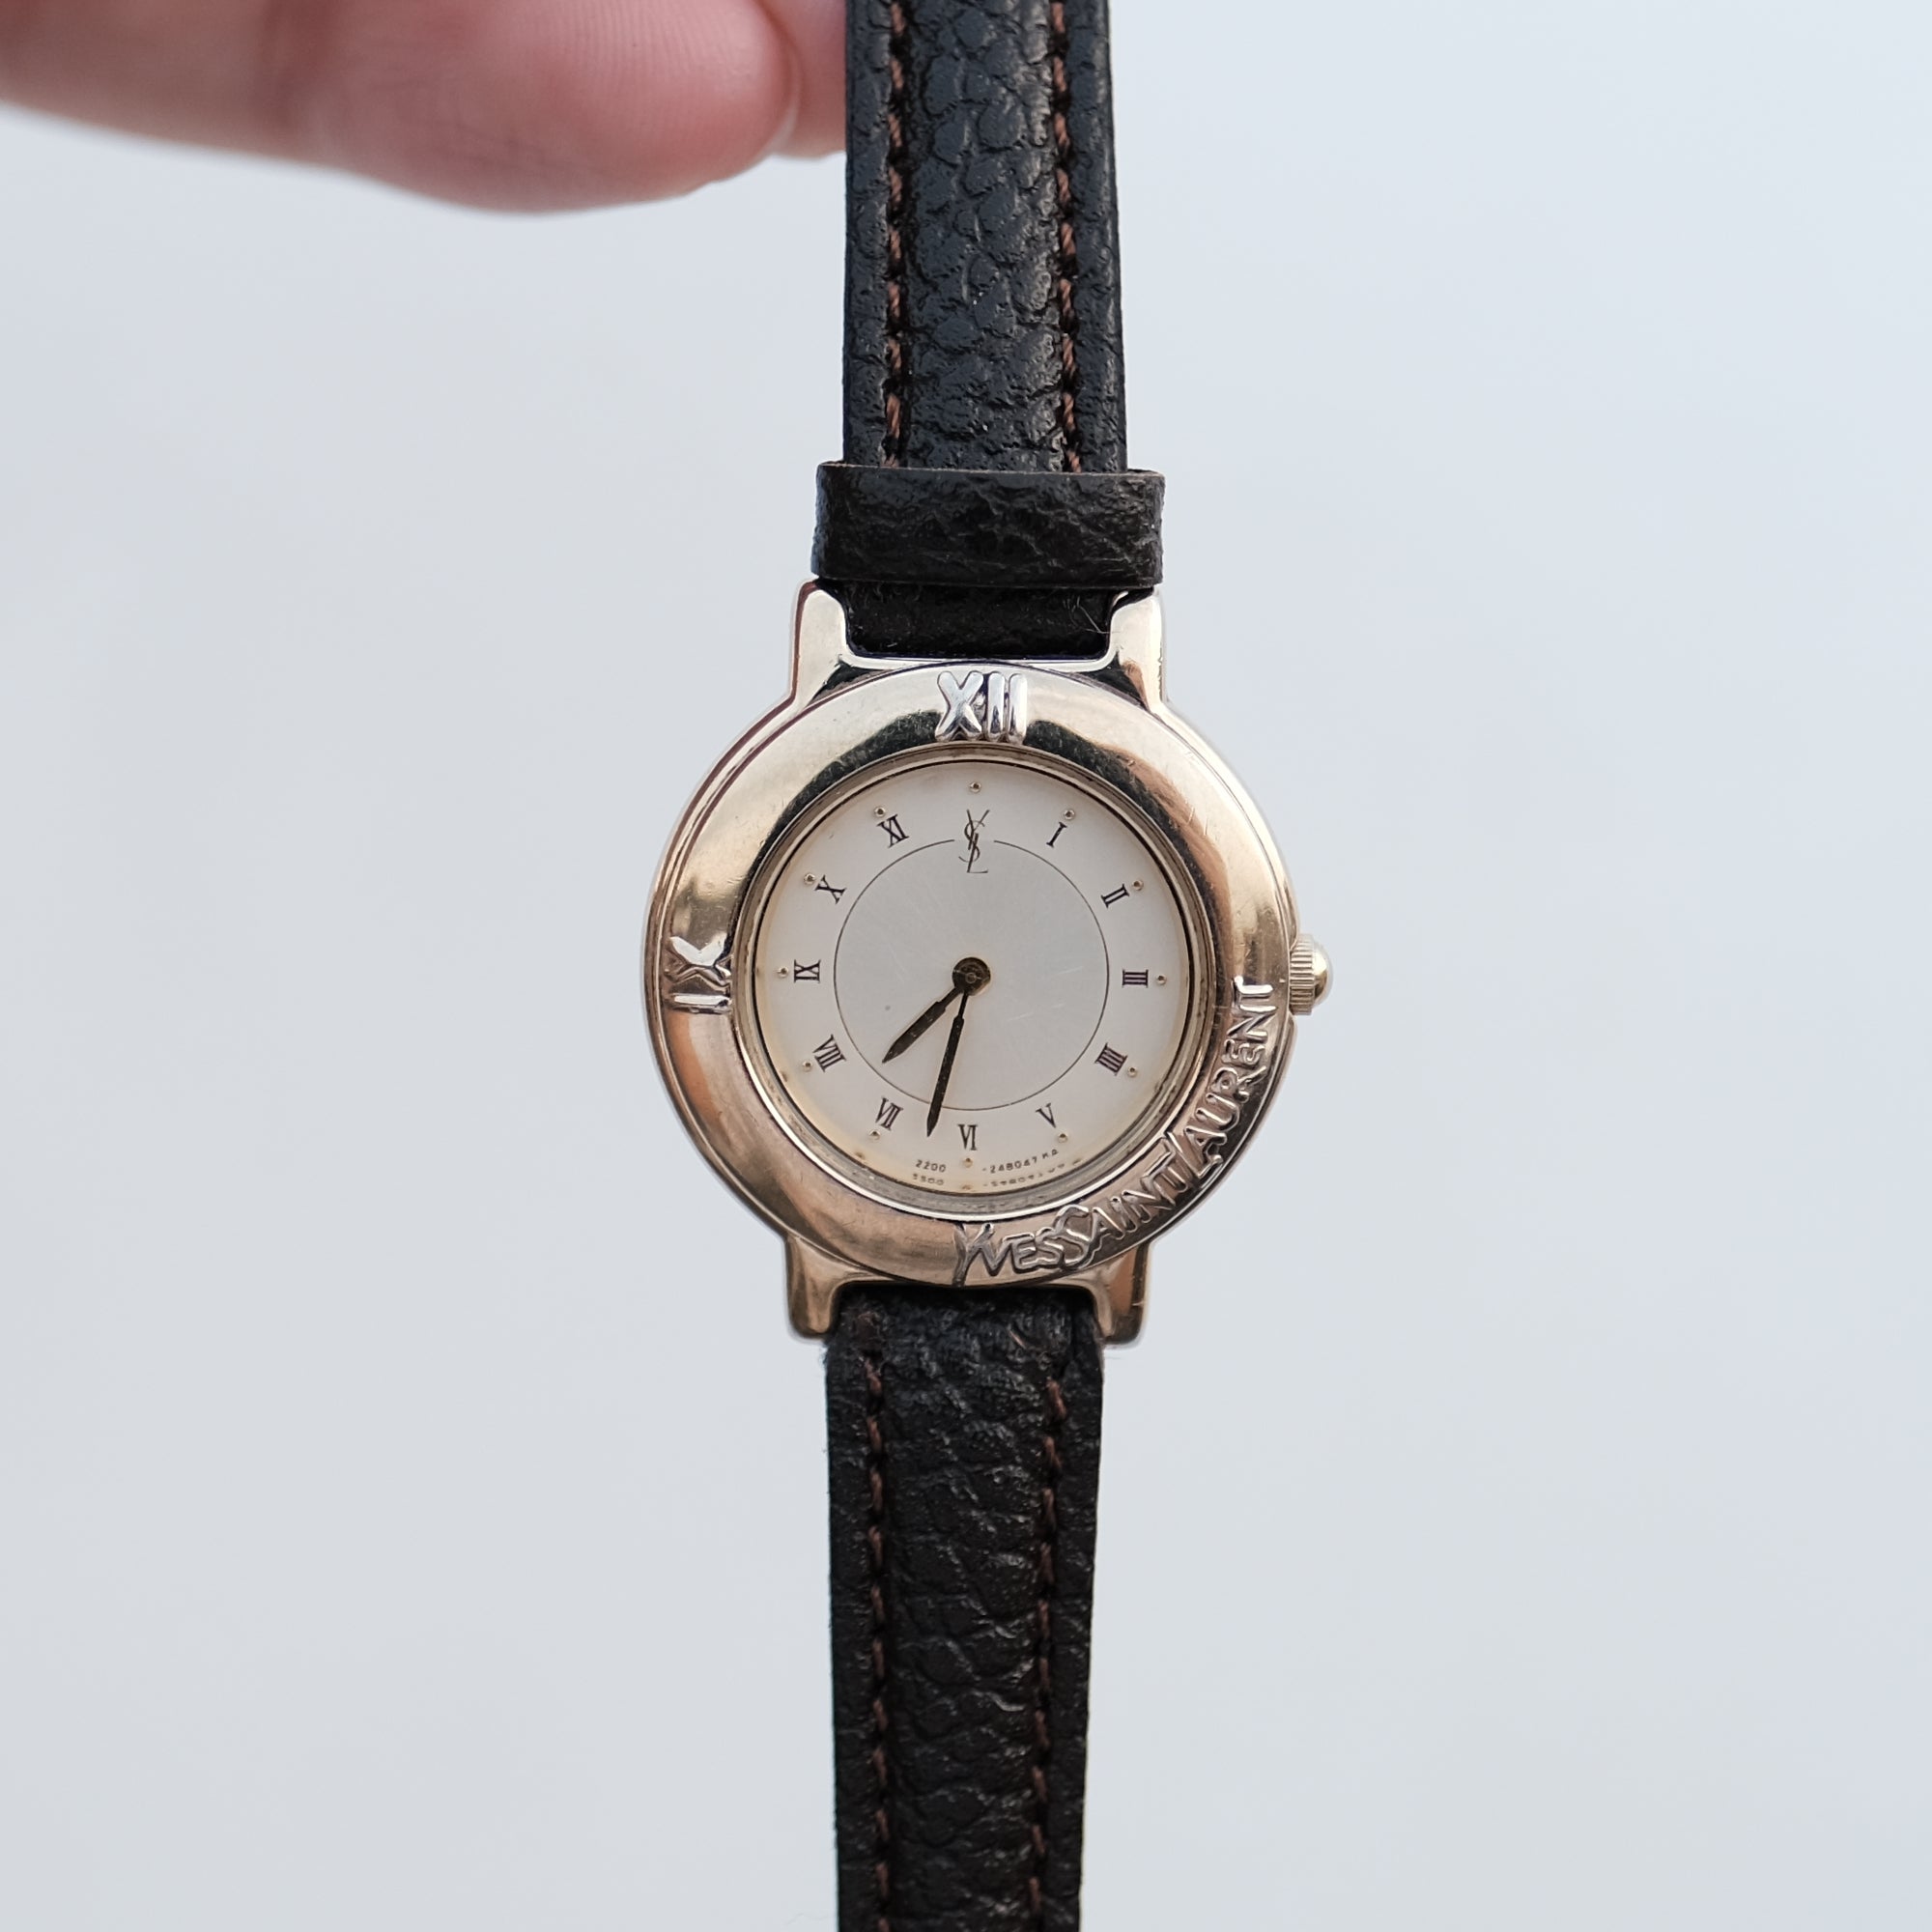 Vintage YSL watch